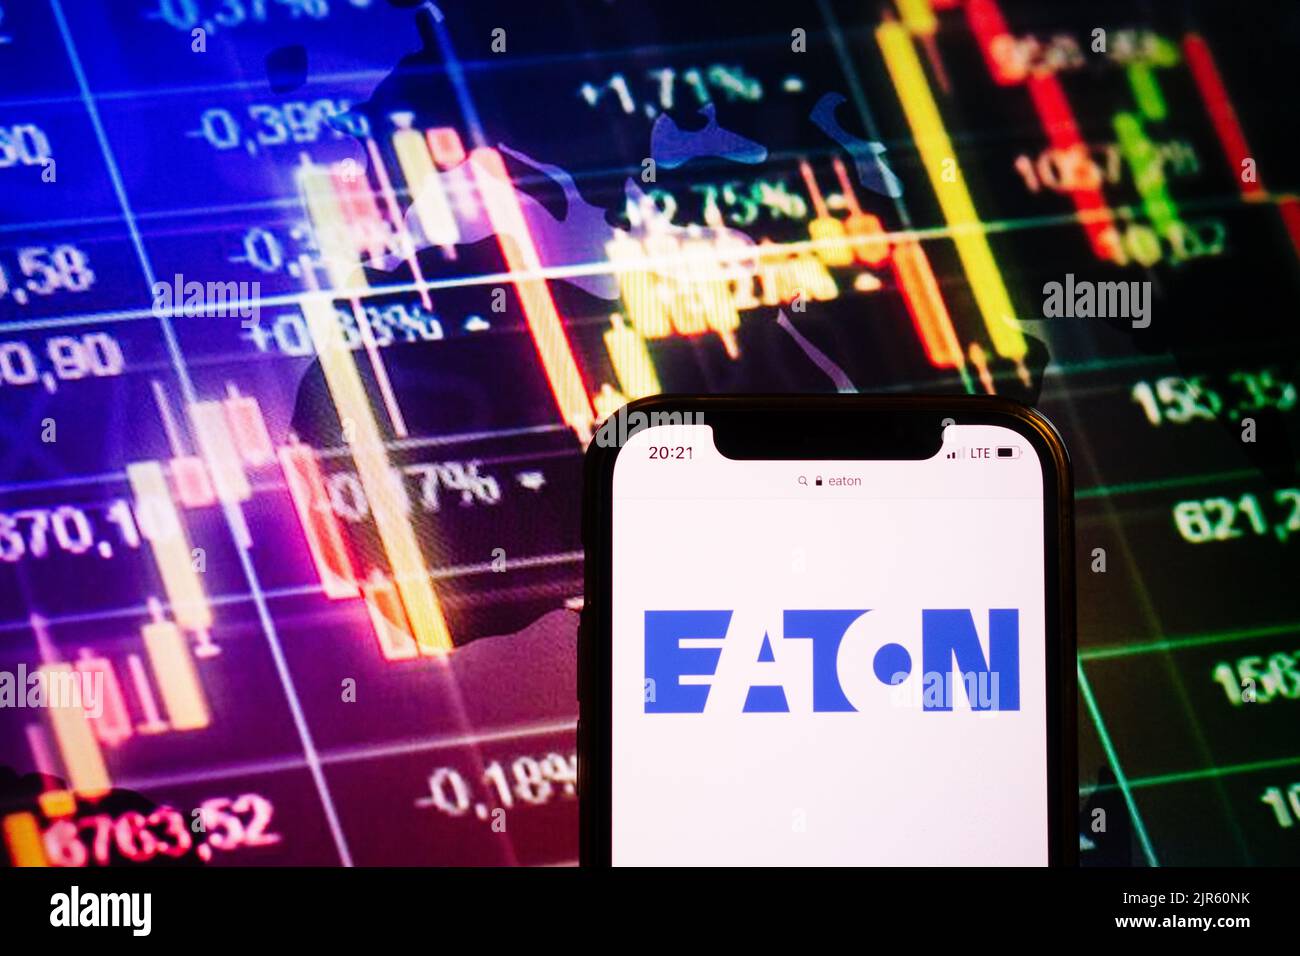 KONSKIE, POLAND - August 10, 2022: Smartphone displaying logo of Eaton company on stock exchange diagram background Stock Photo